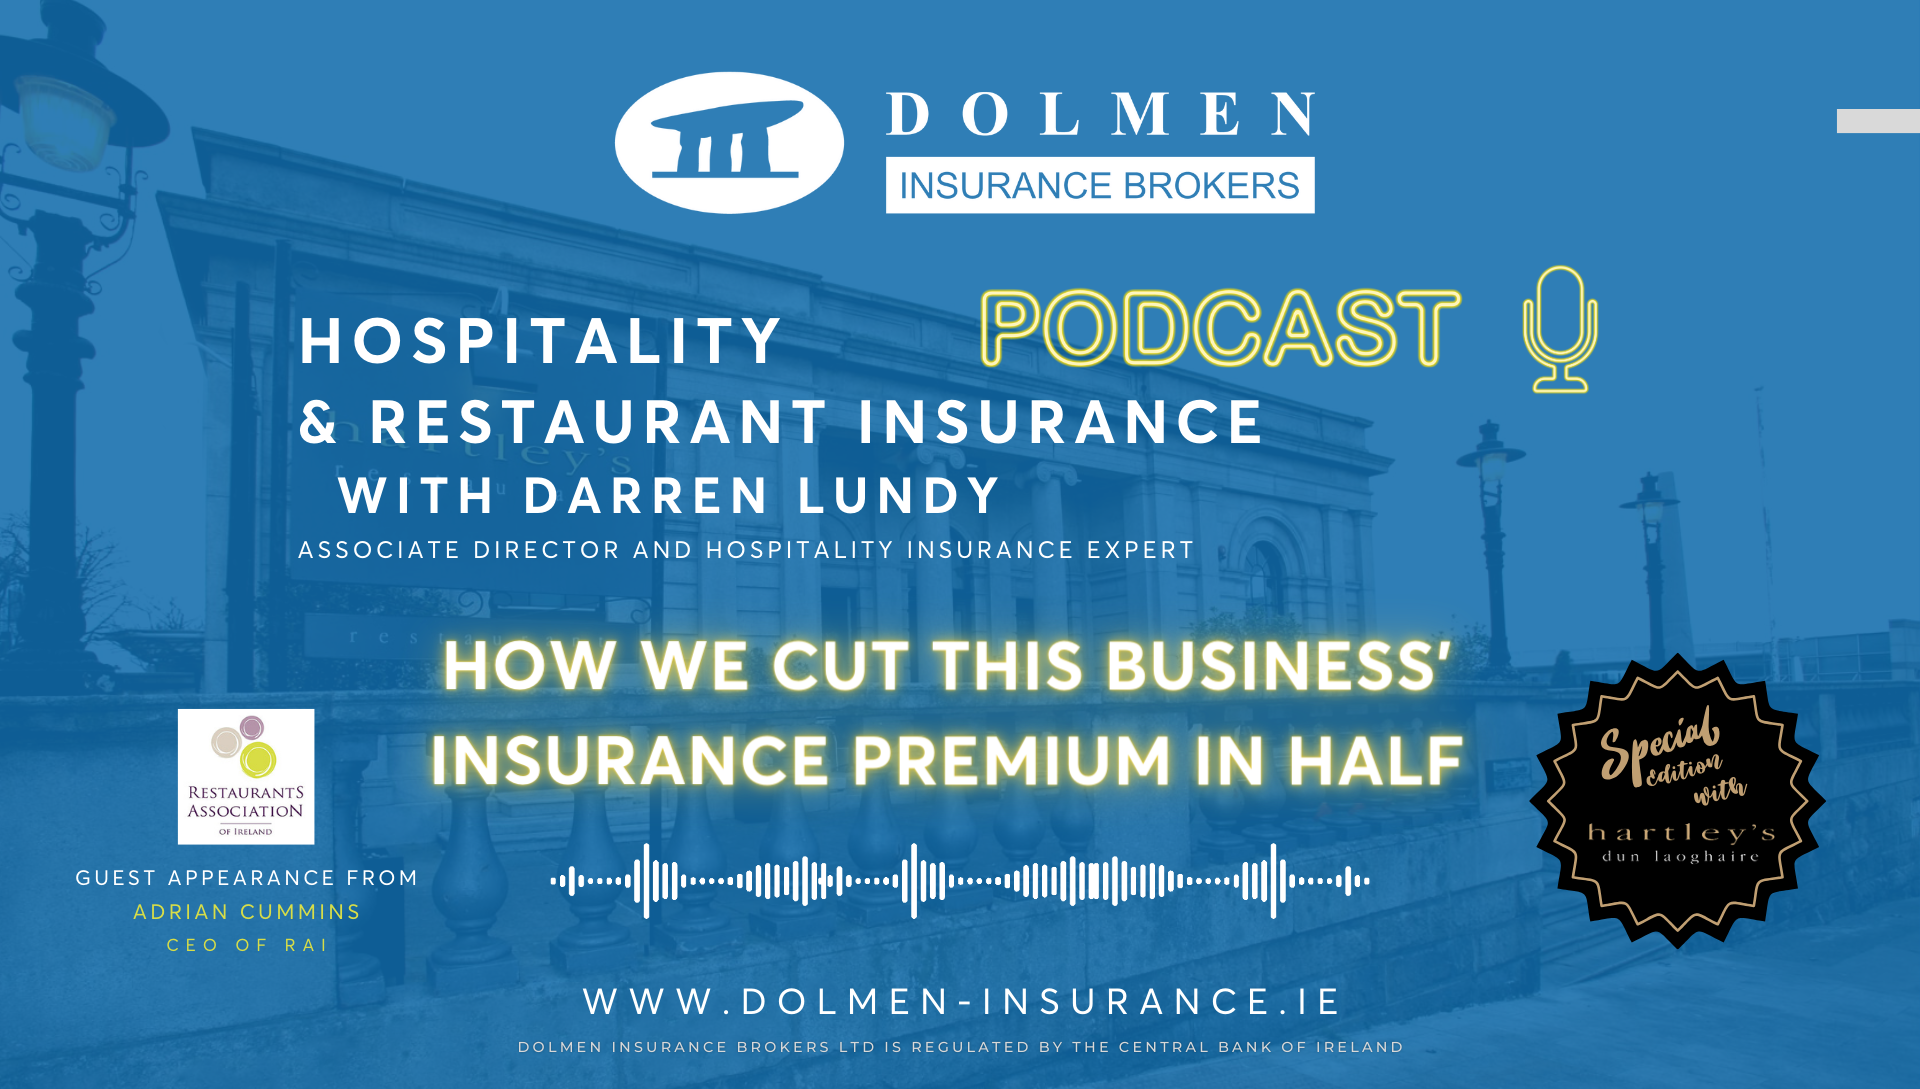 Episode 4 - Hospitality & Restaurant Insurance with Darren Lundy of Dolmen Insurance